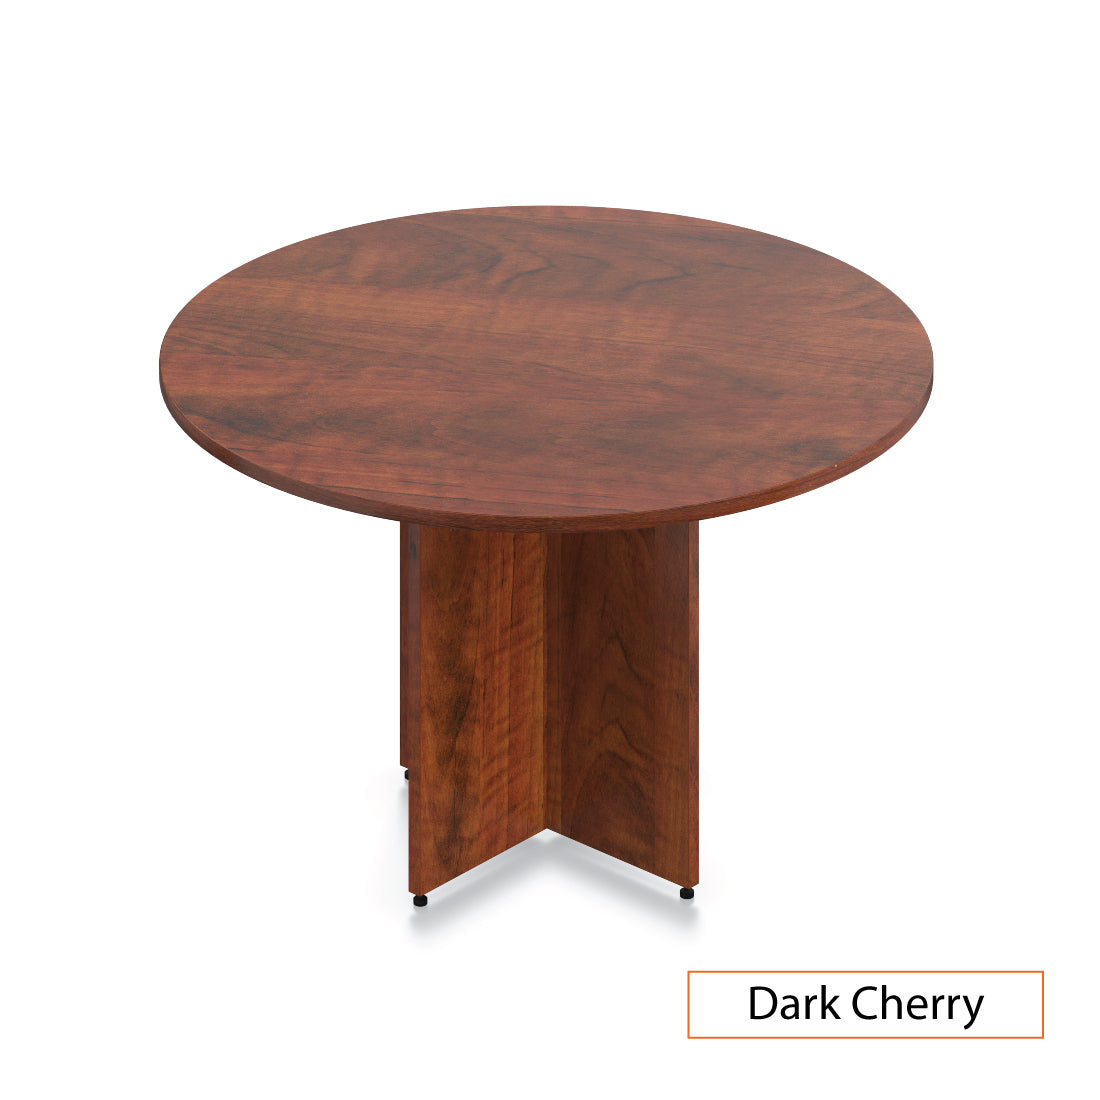 48" Round Table/Cross Base with 4 Chairs (G10902B) - Kainosbuy.com